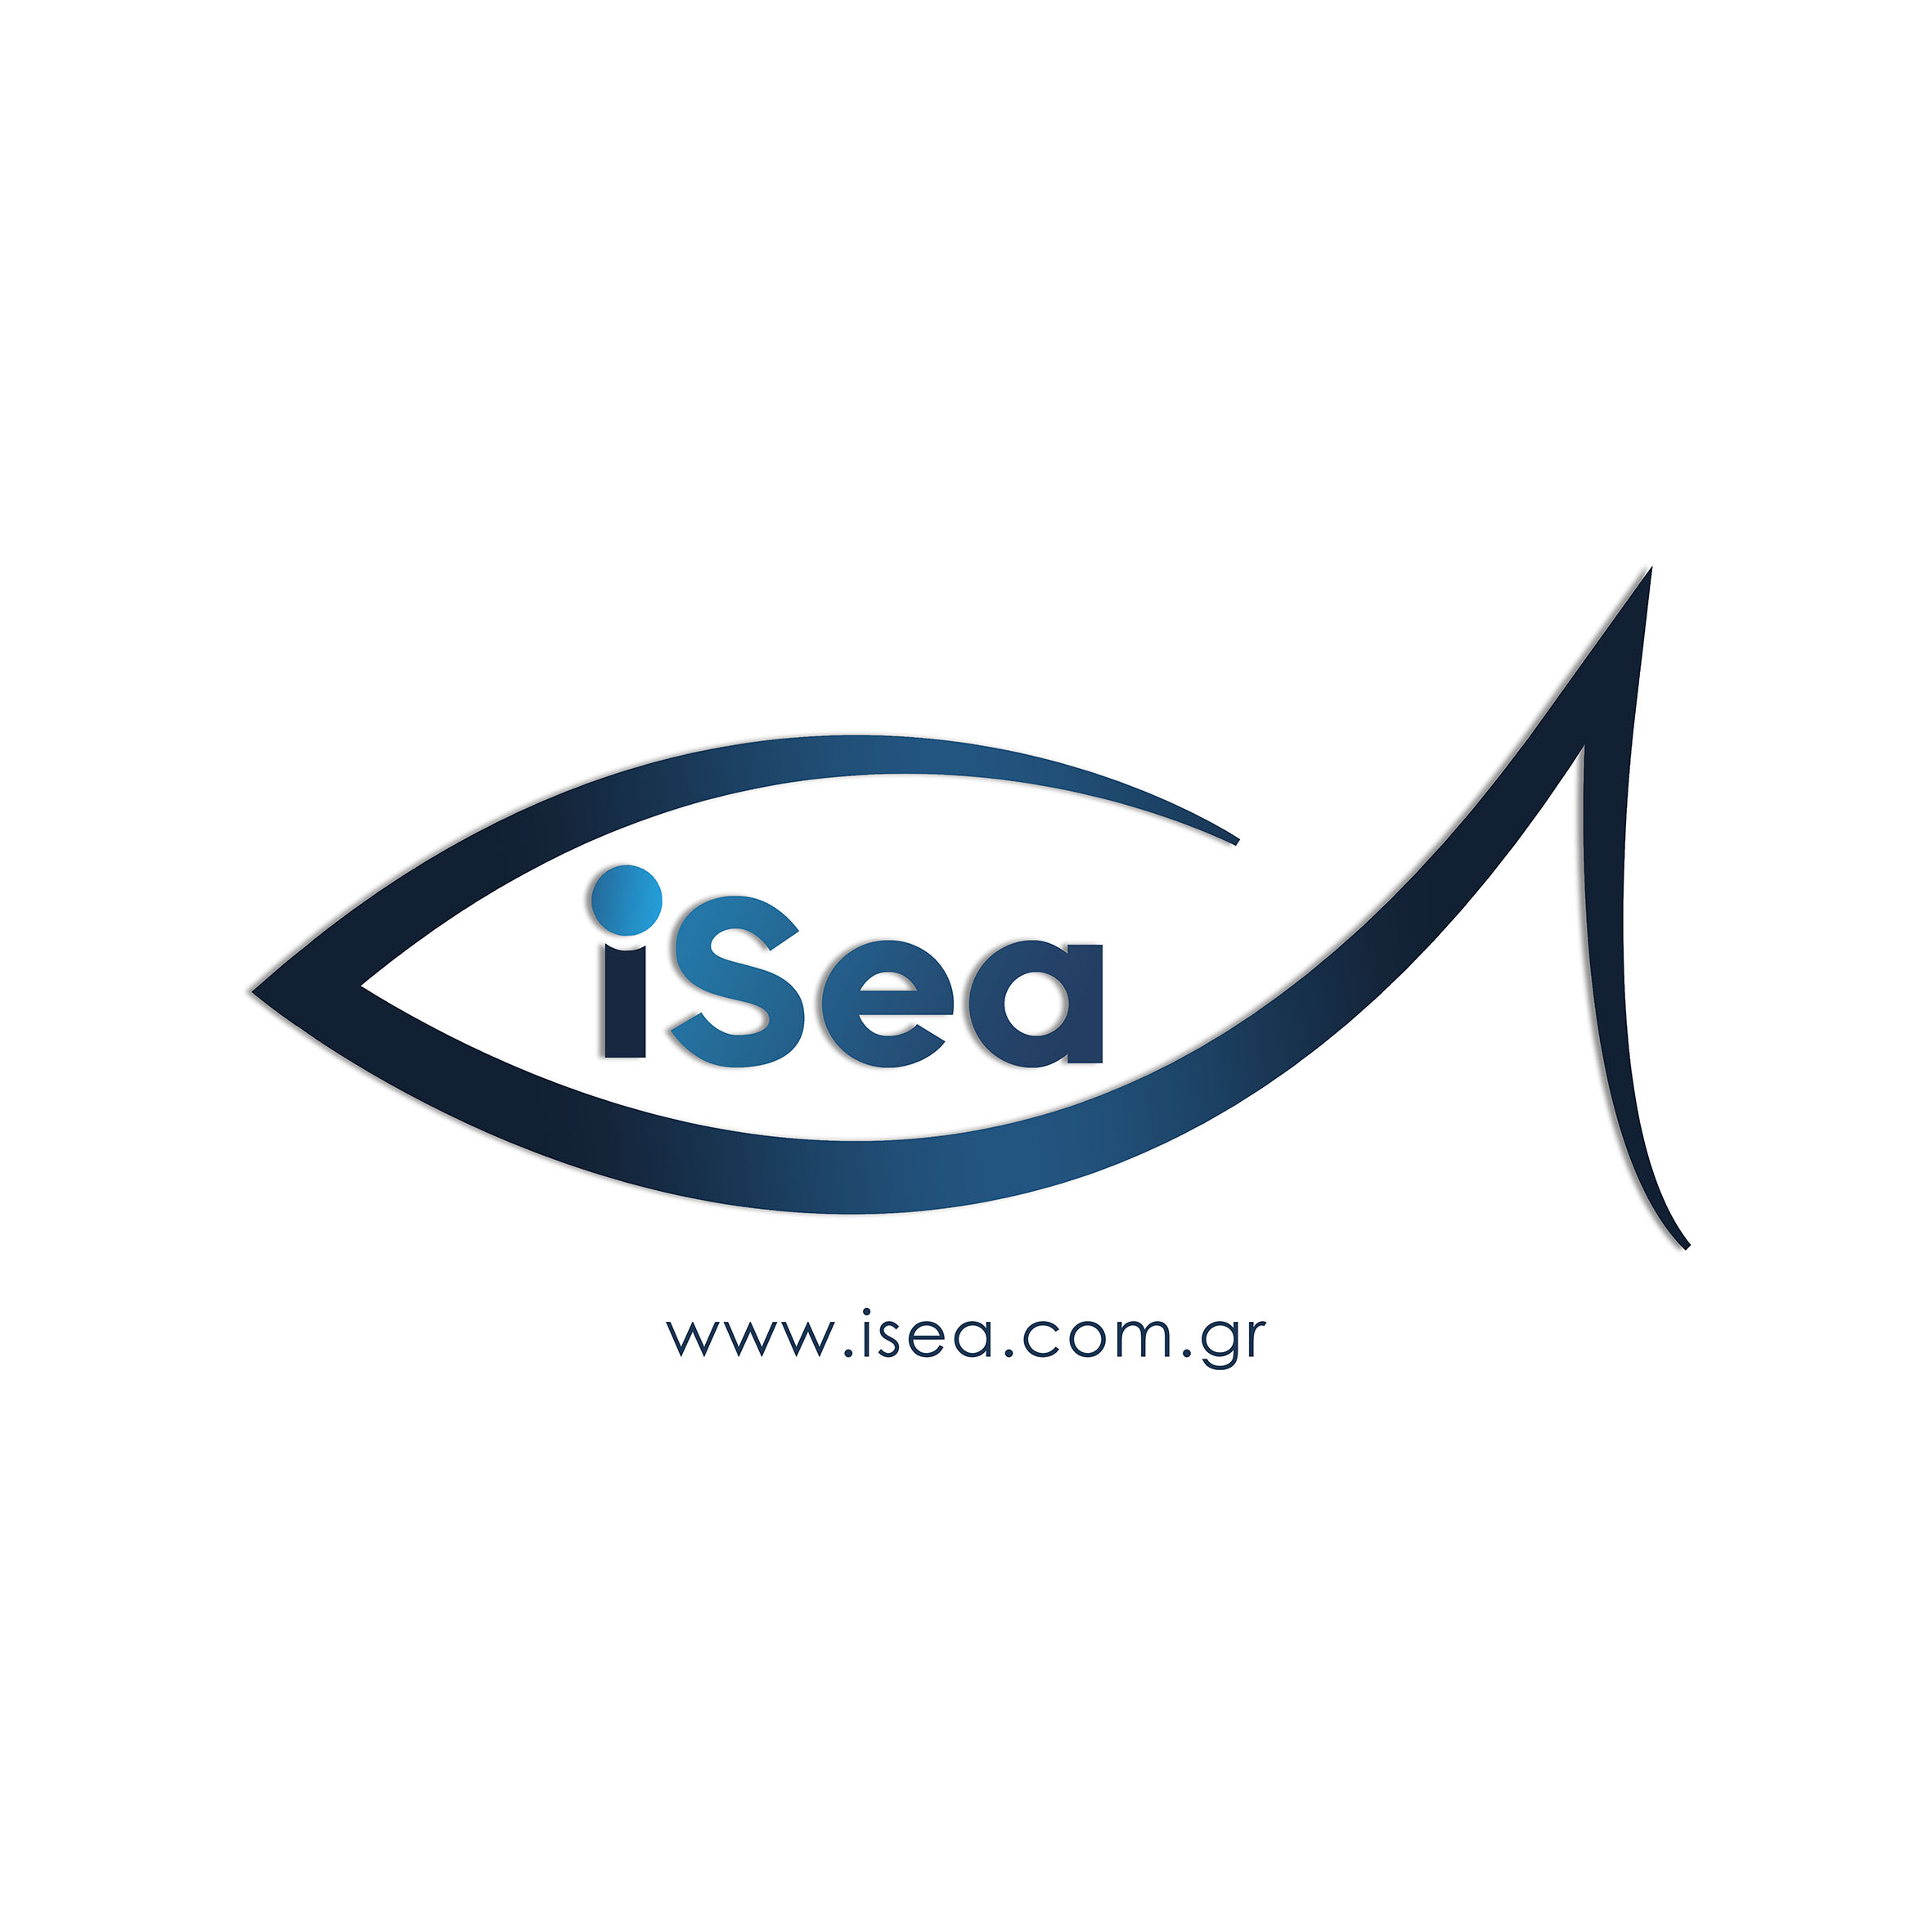 iSea - Λογότυπο